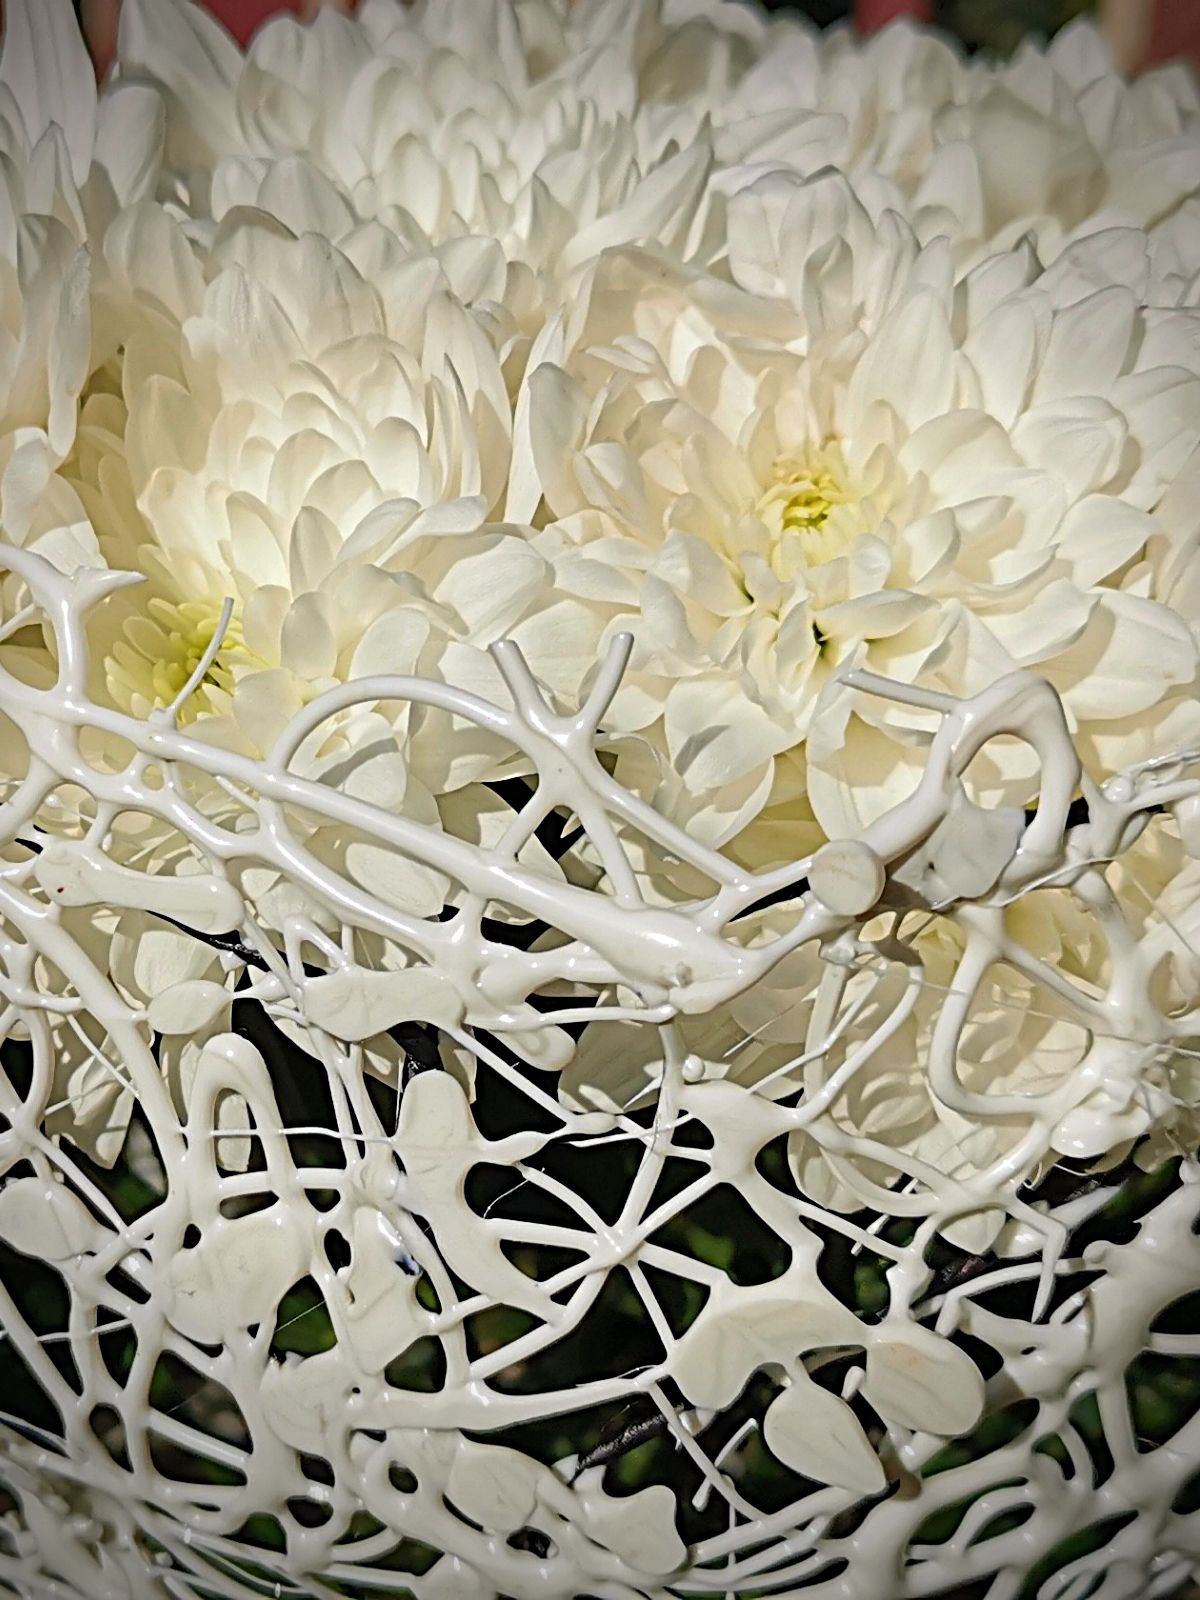 Sarah Willemart with Pina Colada White Chrysanthemum - on Thursd 04